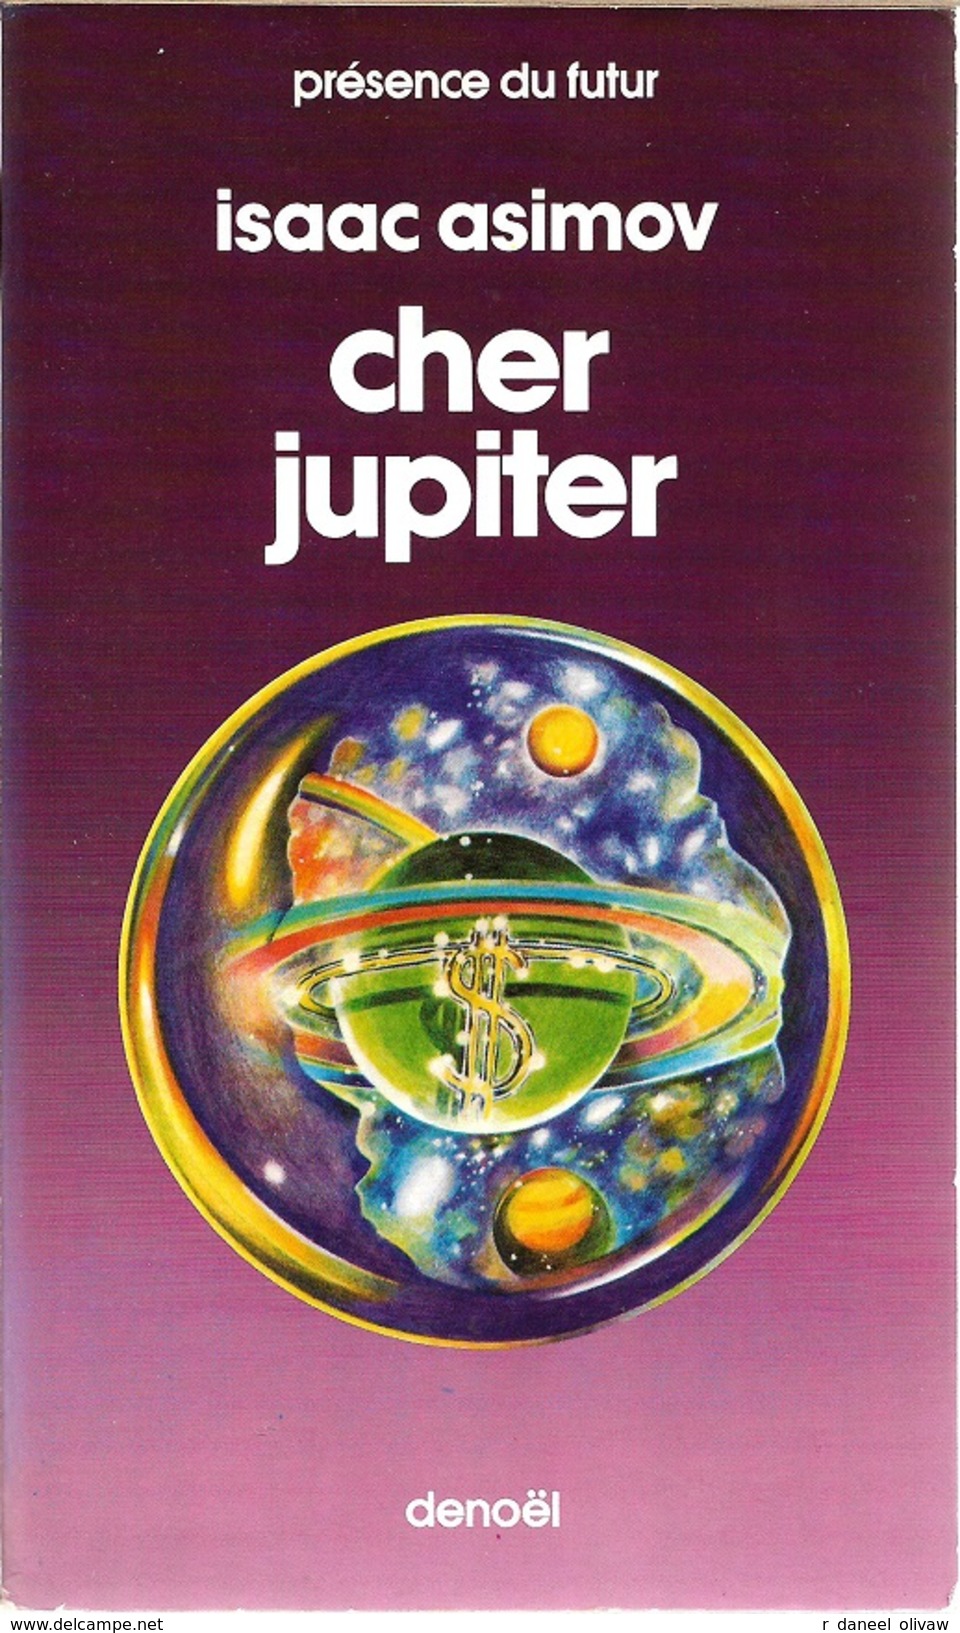 PDF 233 - ASIMOV, Isaac - Cher Jupiter (TBE) - Présence Du Futur